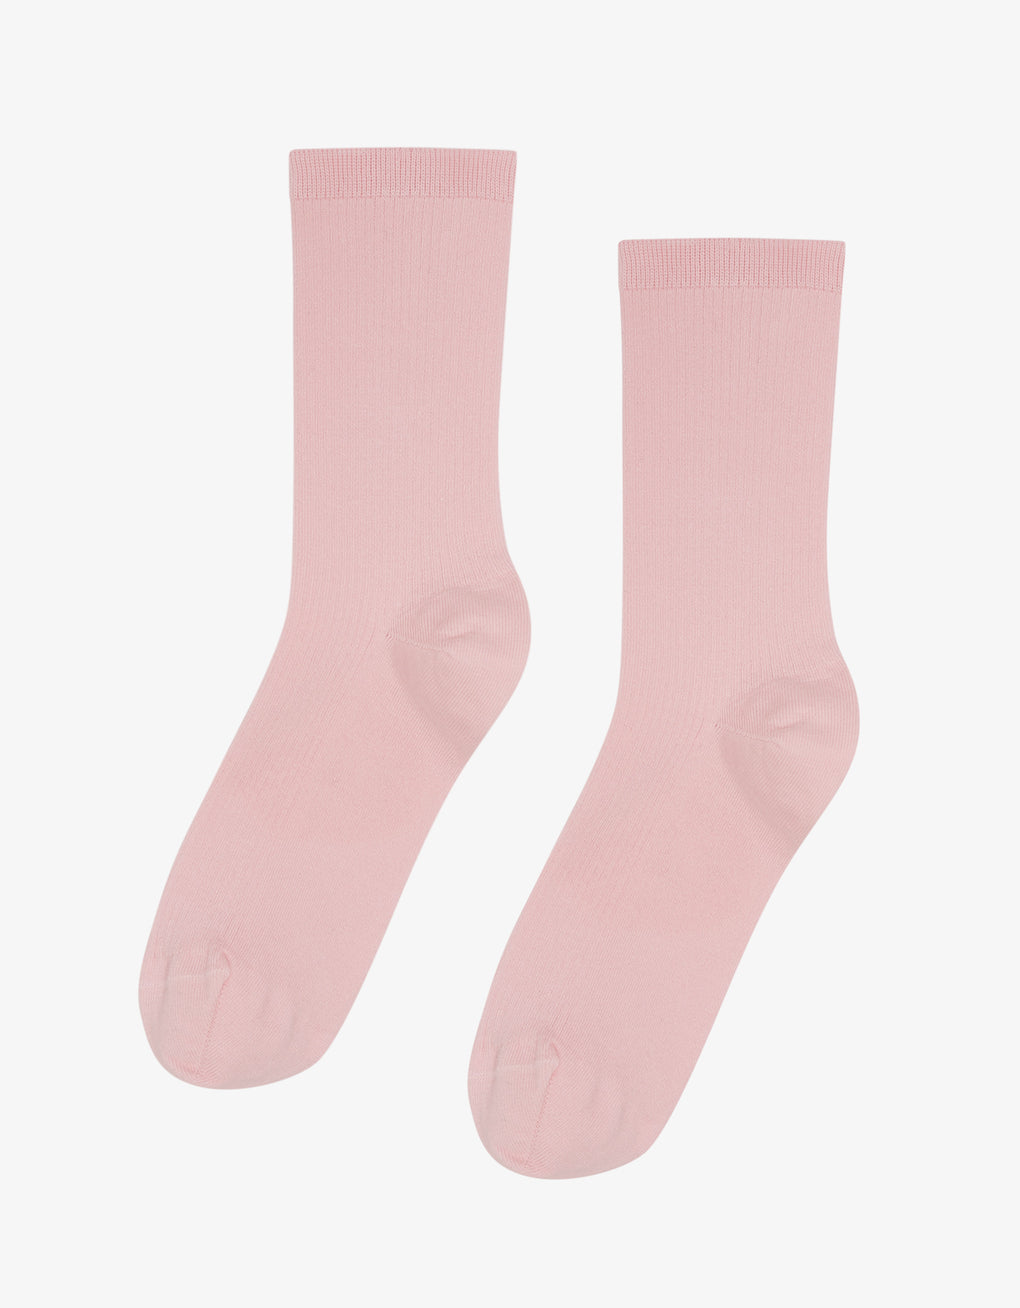 Organic Socks - Faded Pink